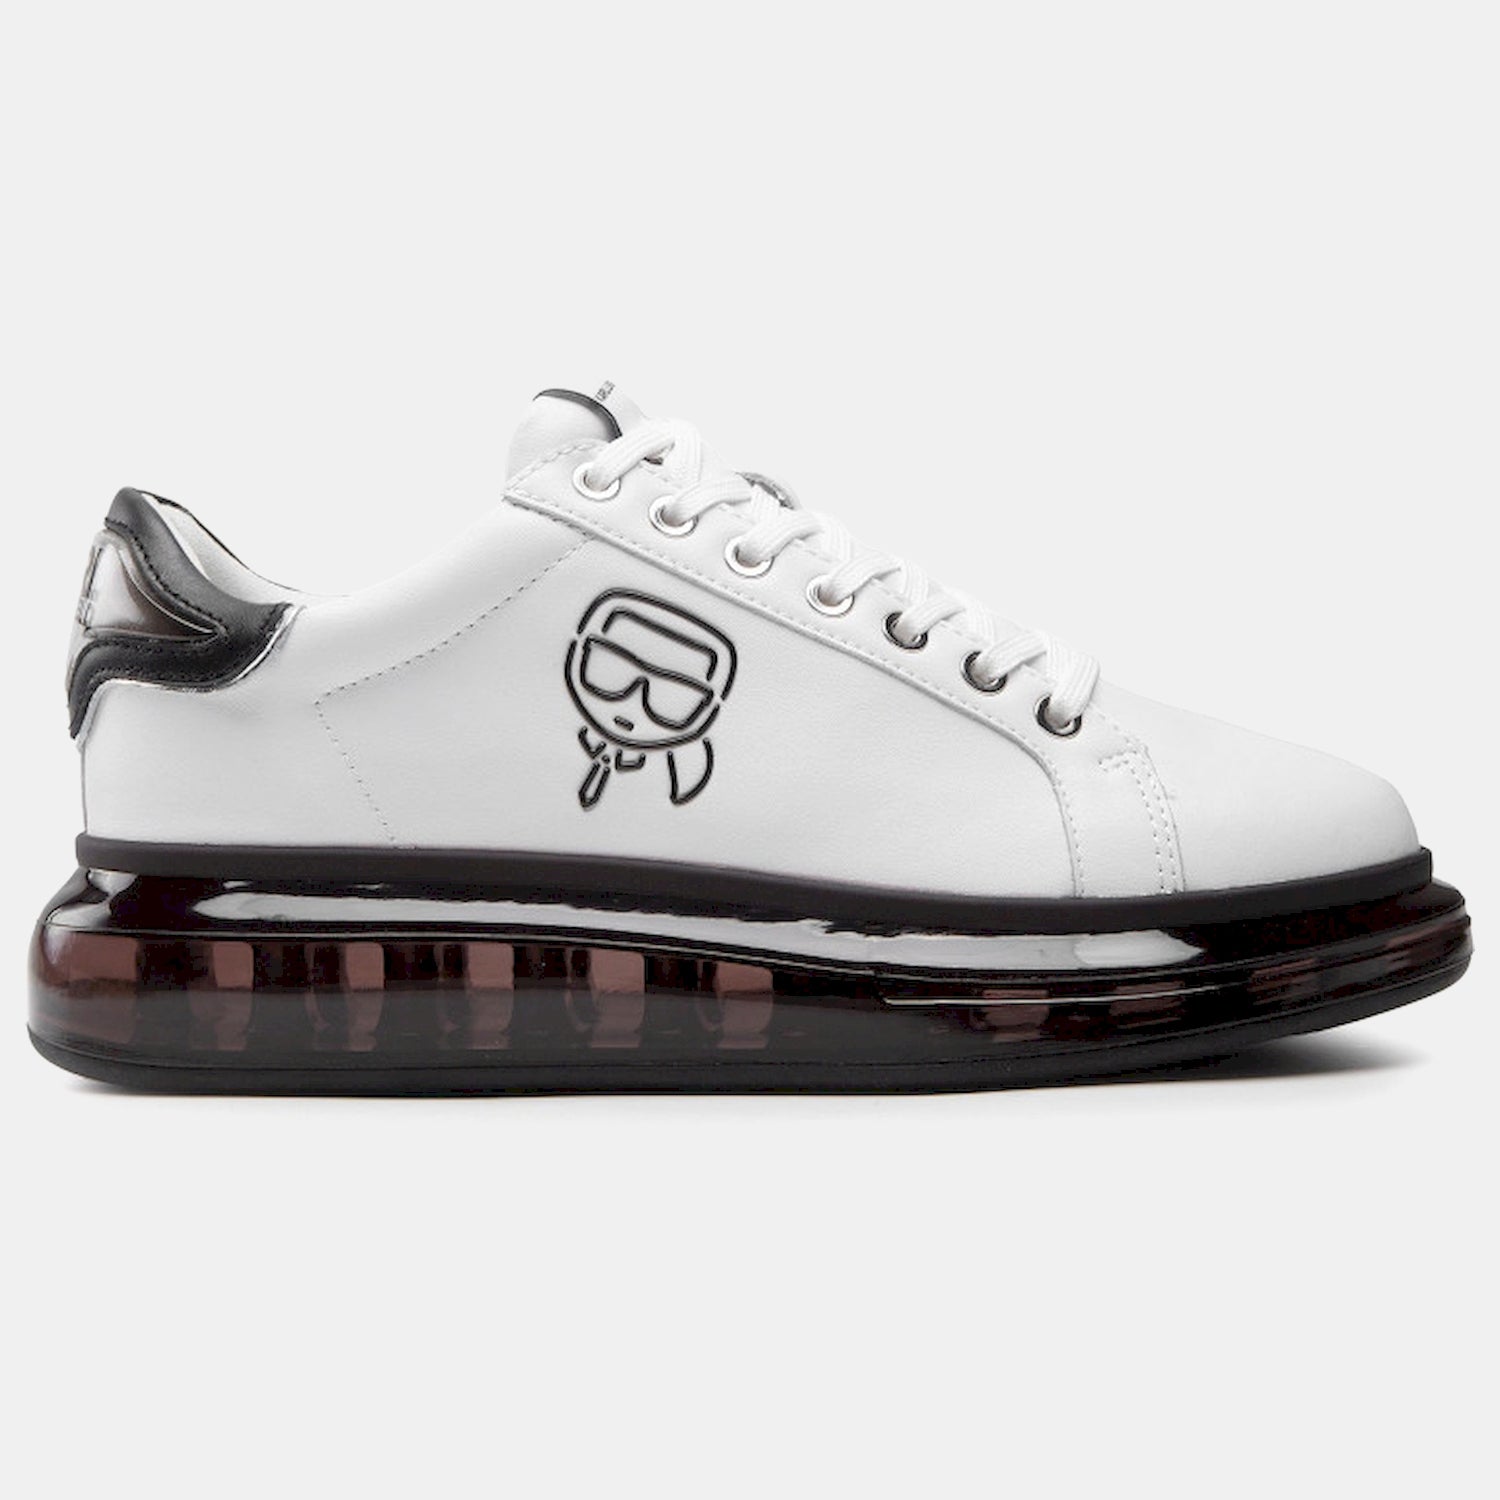 Karl Lagerfeld Sapatilhas Sneakers Shoes Kl52631 Whi Black Branco Preto_shot4